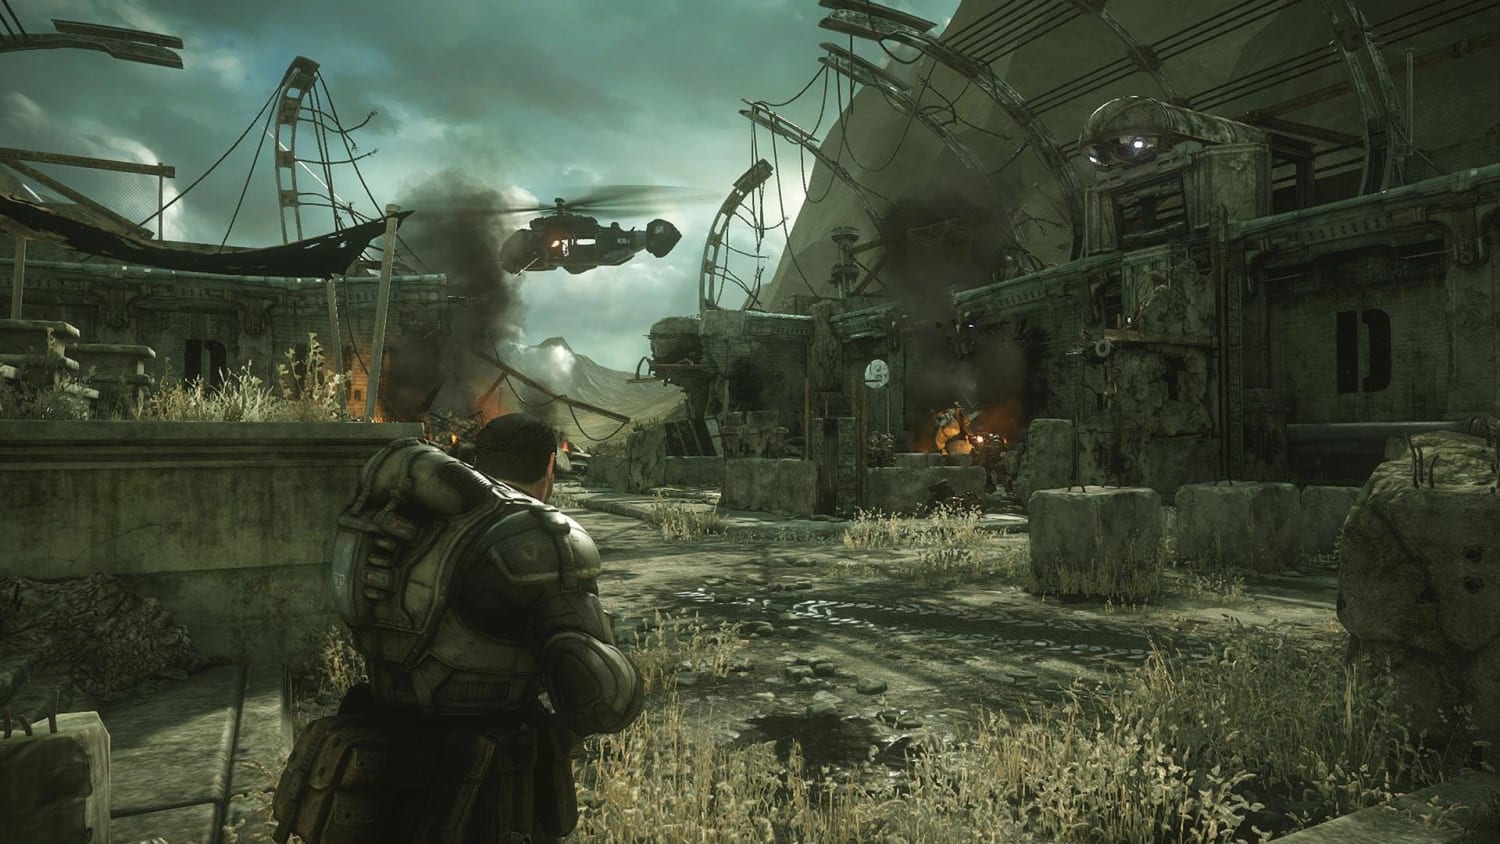 Gears of War 5 - PC Gameplay (1080p60fps) 